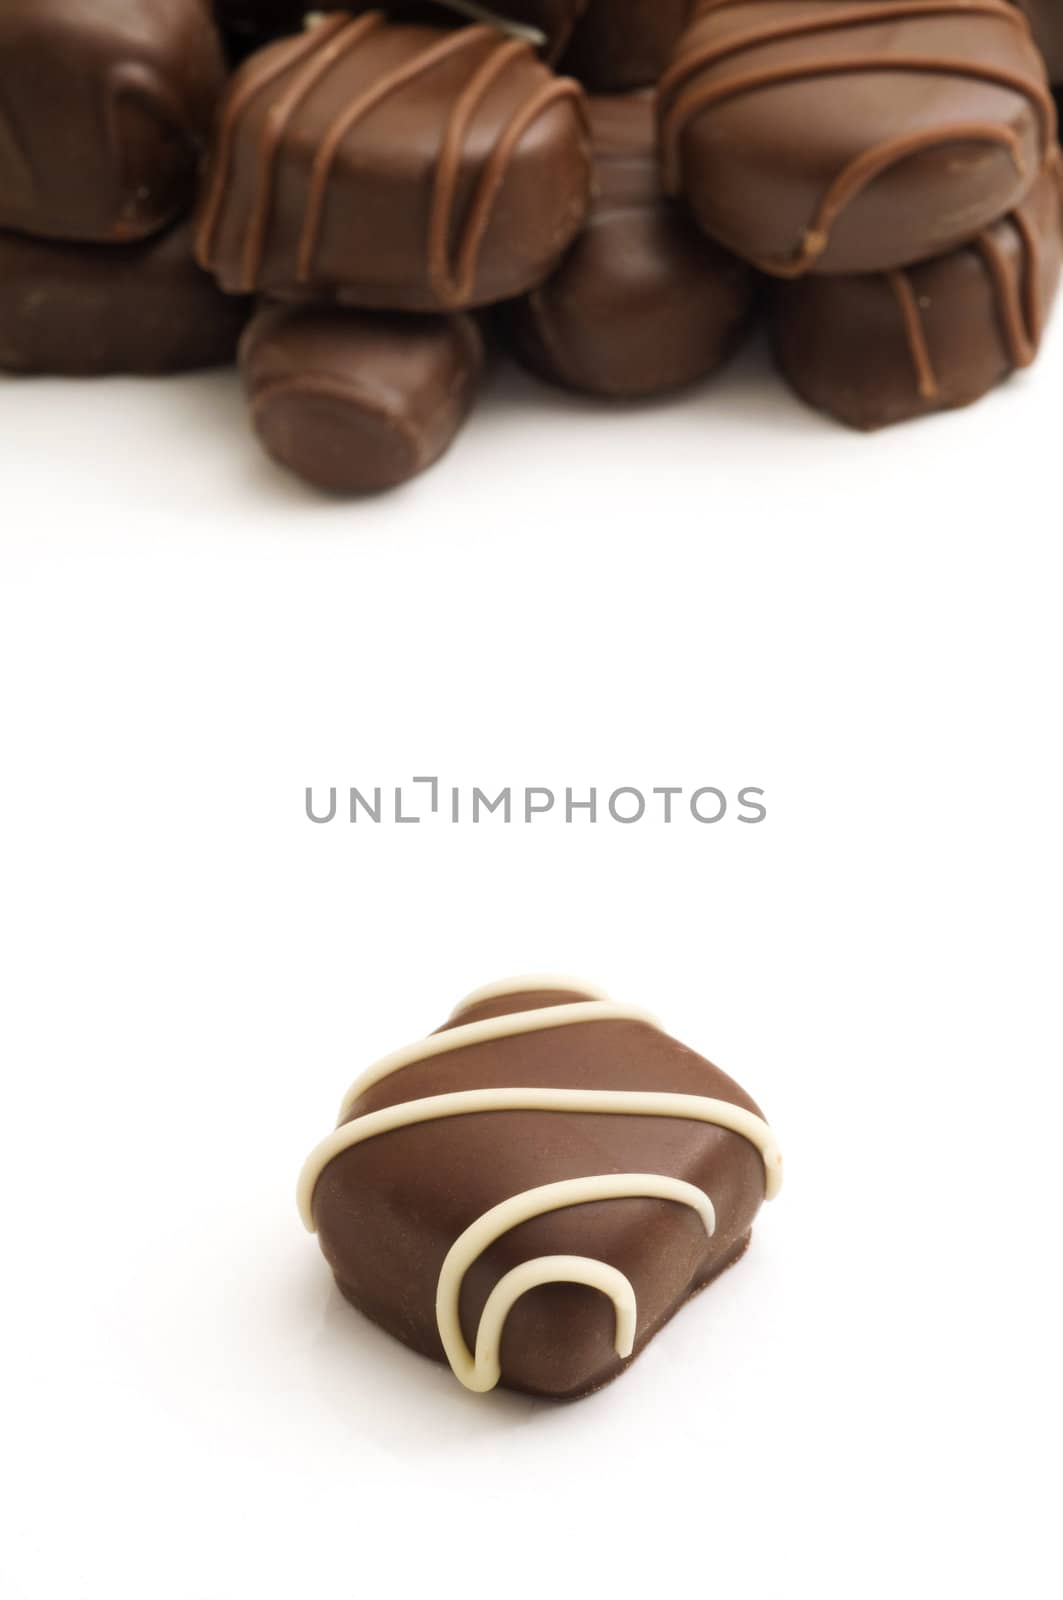 Chocolate by Gordo25